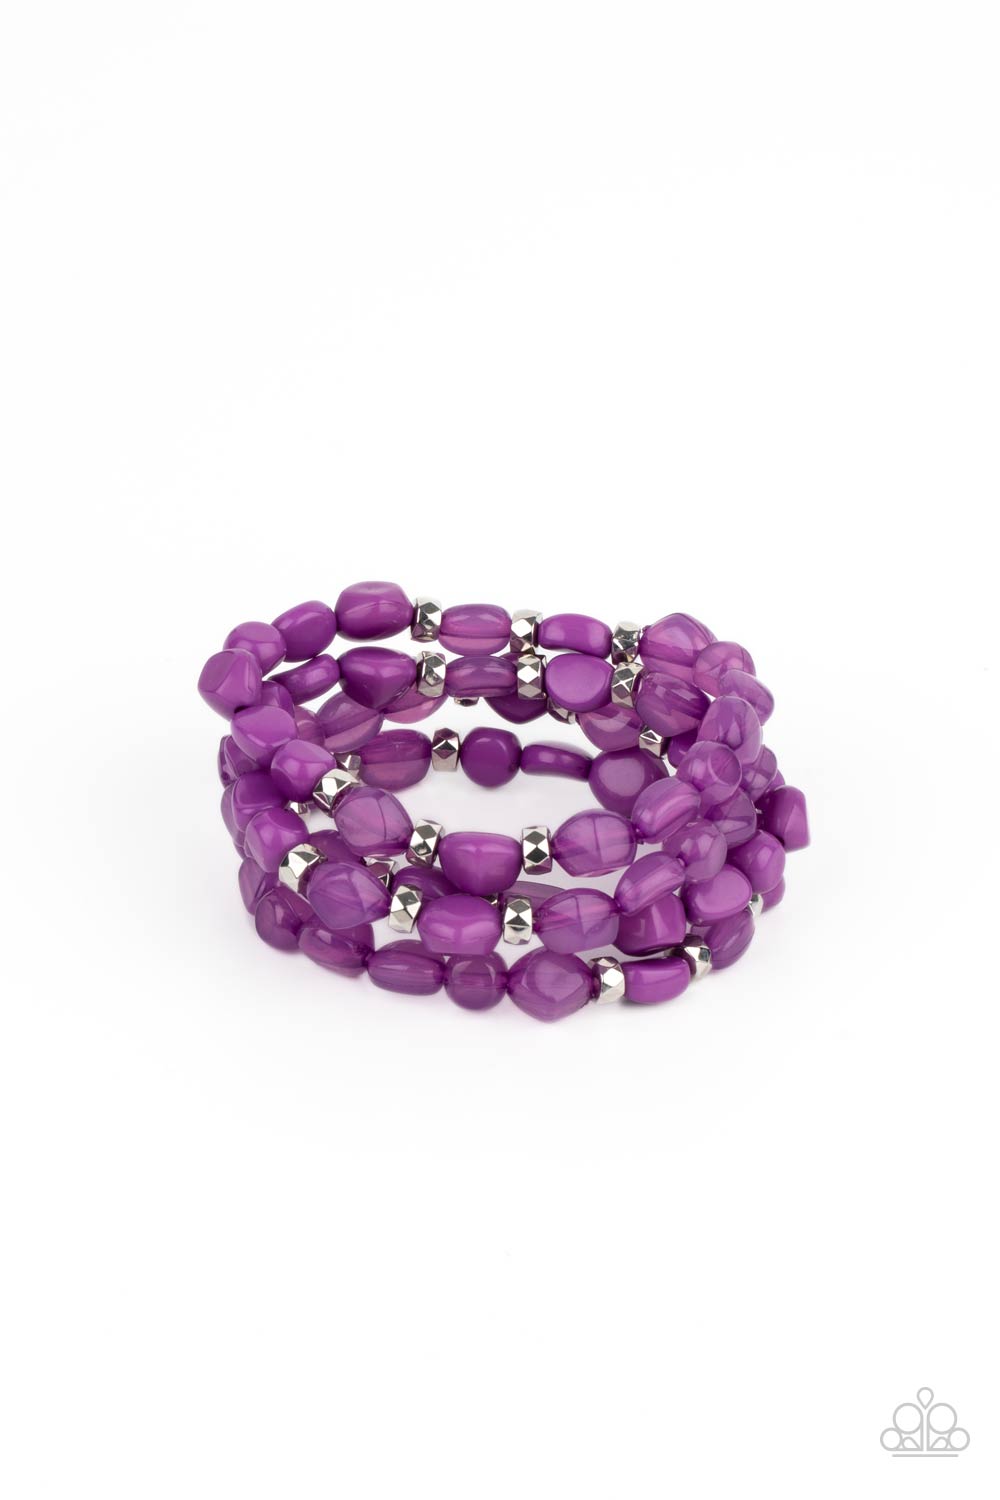 five-dollar-jewelry-nice-glowing-purple-paparazzi-accessories